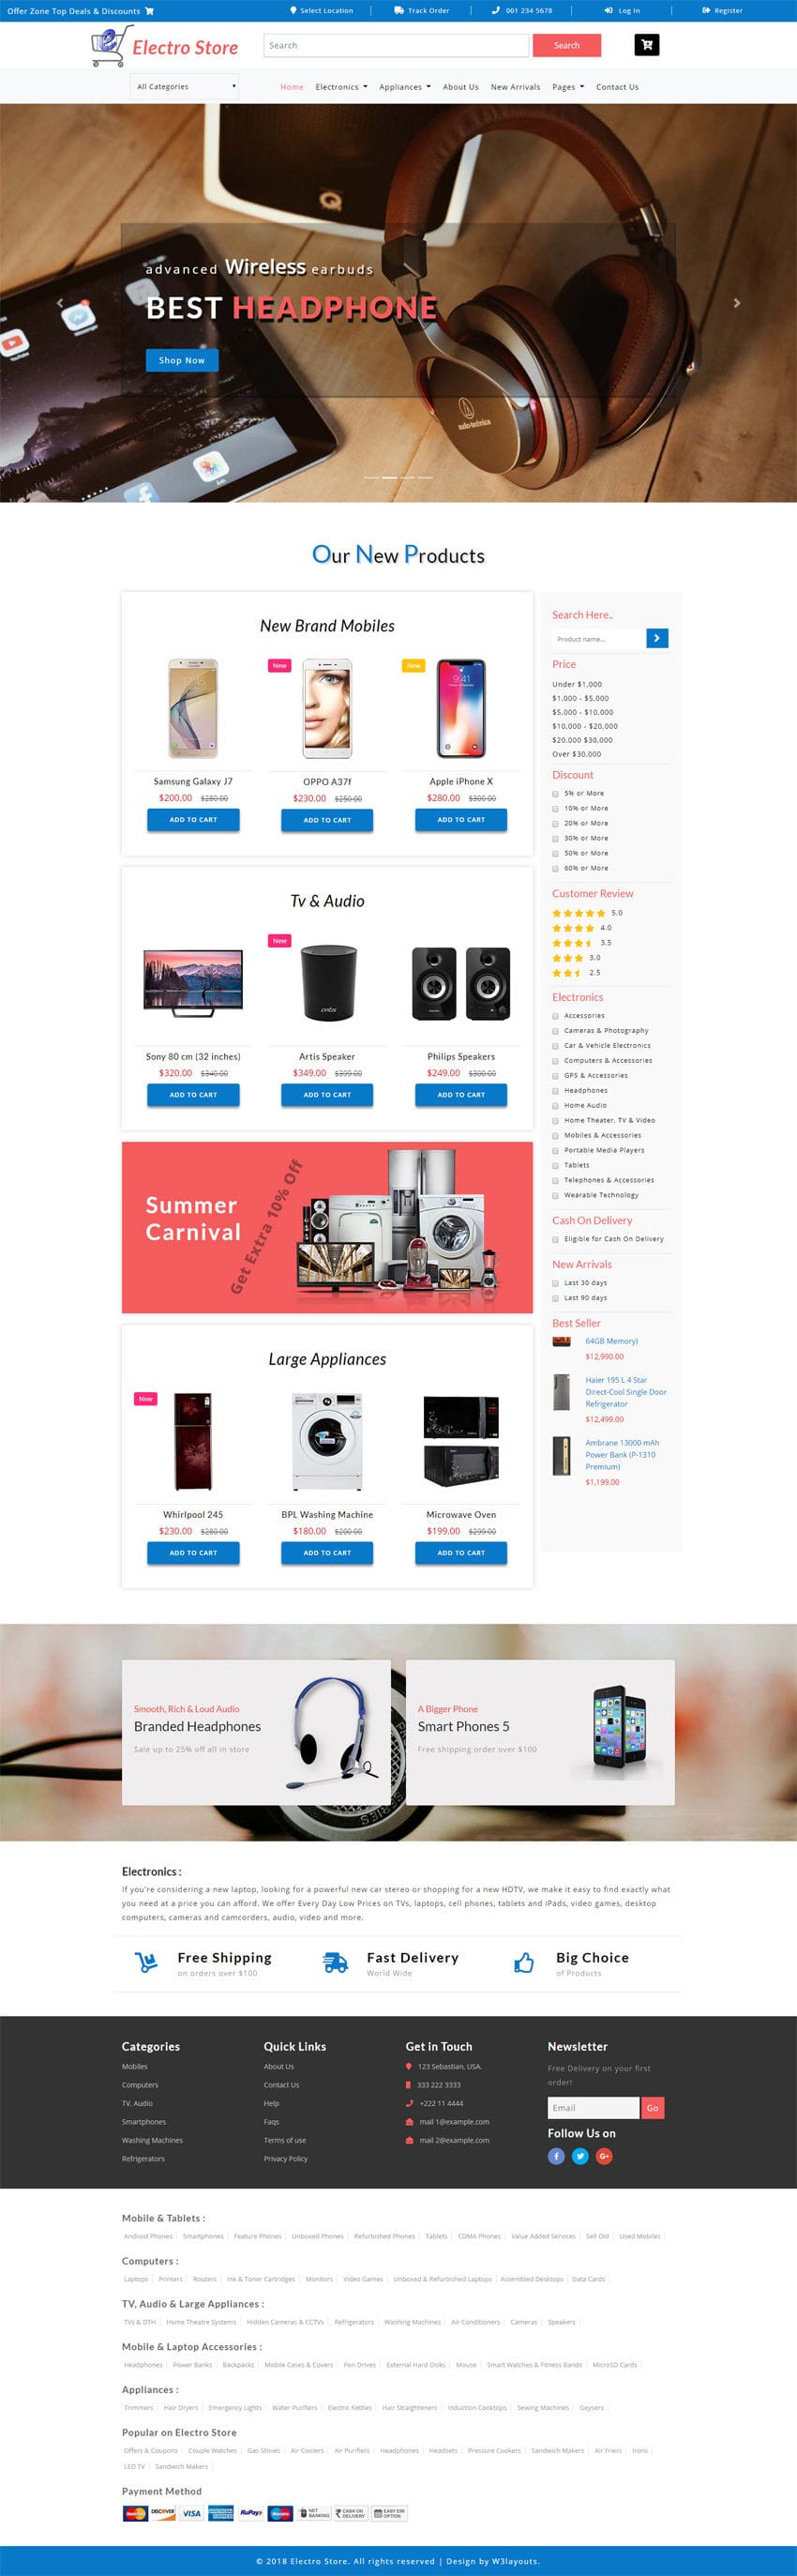 Electro Store Full Screenshot